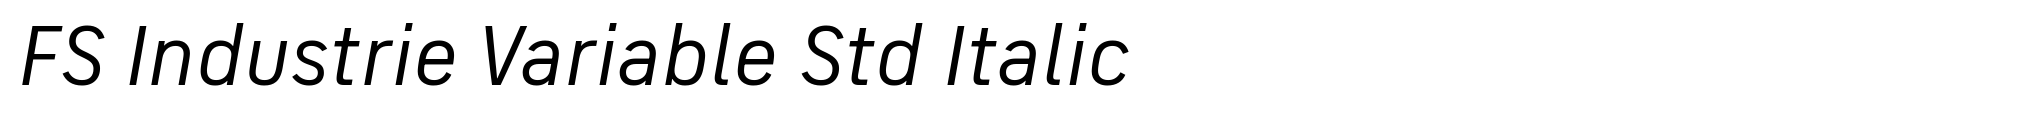 FS Industrie Variable Std Italic image